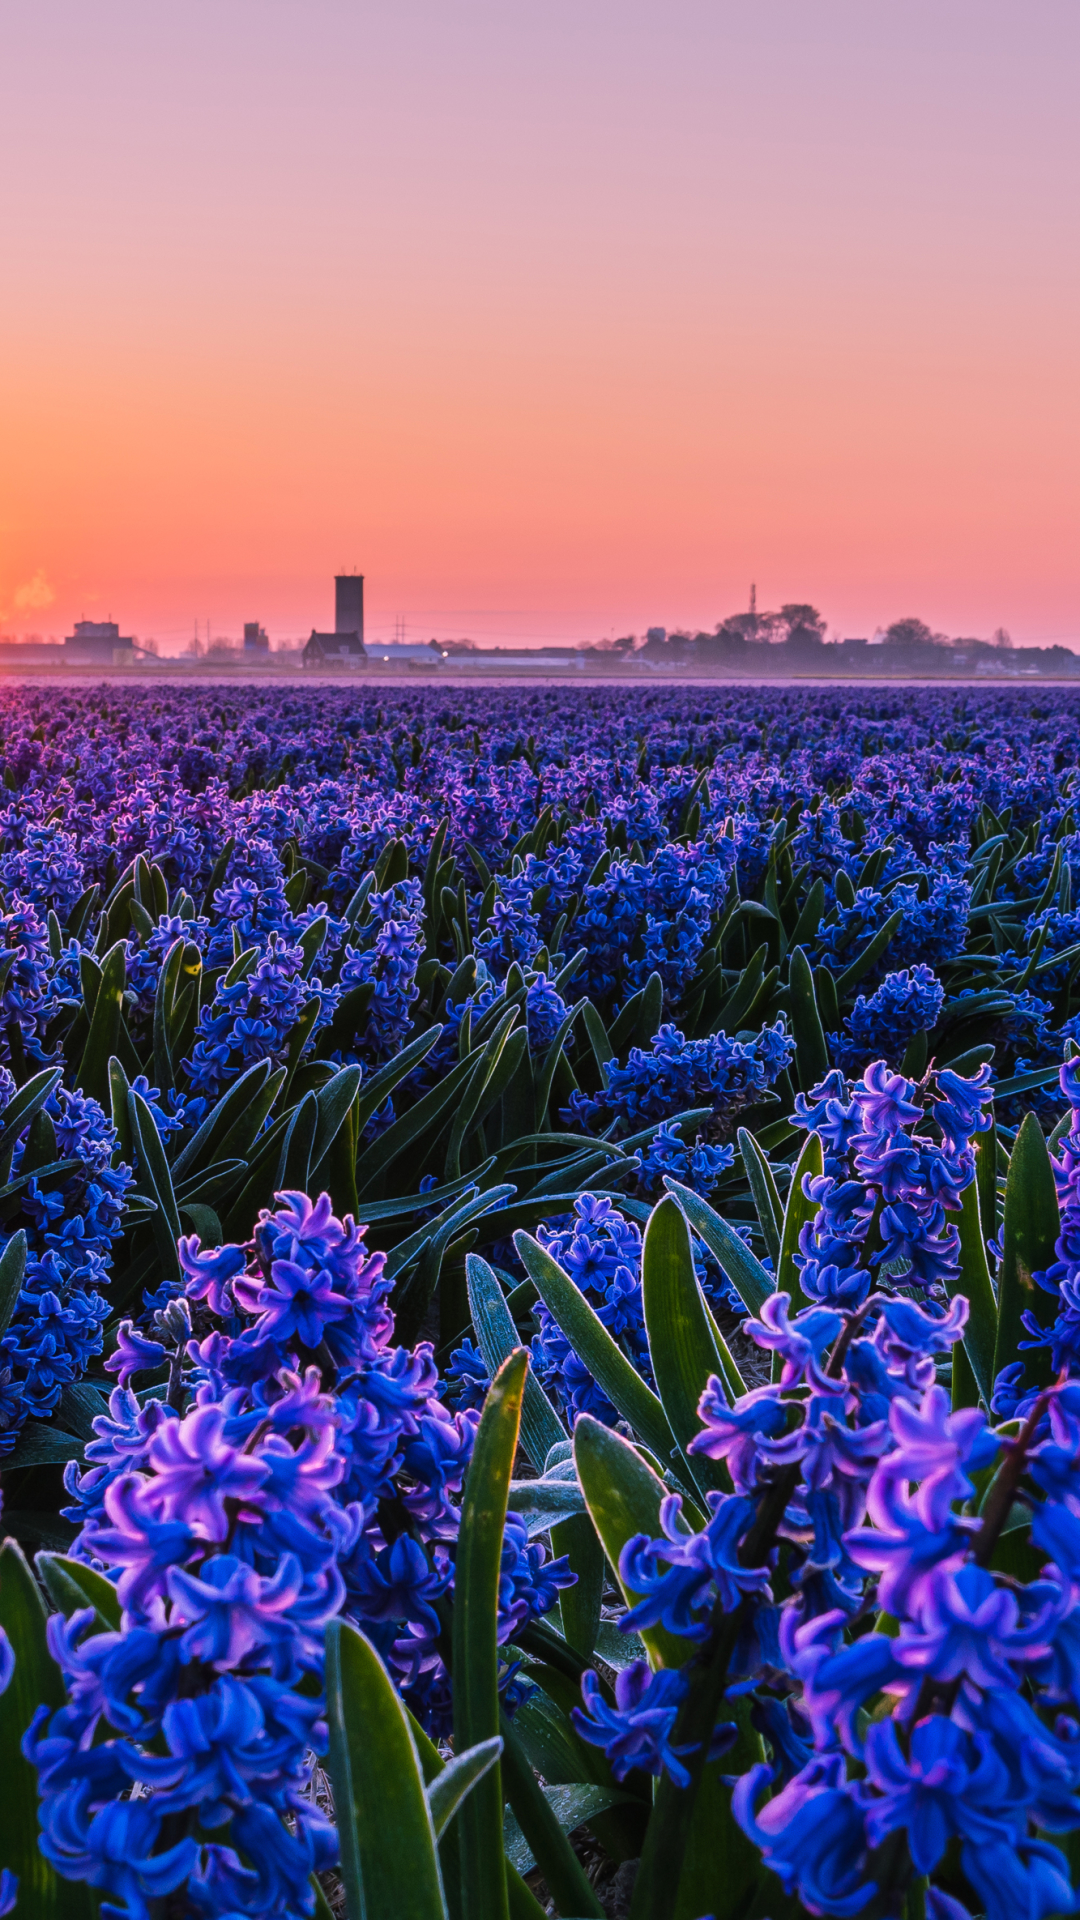 Sunset over Field of Purple Hyacinths